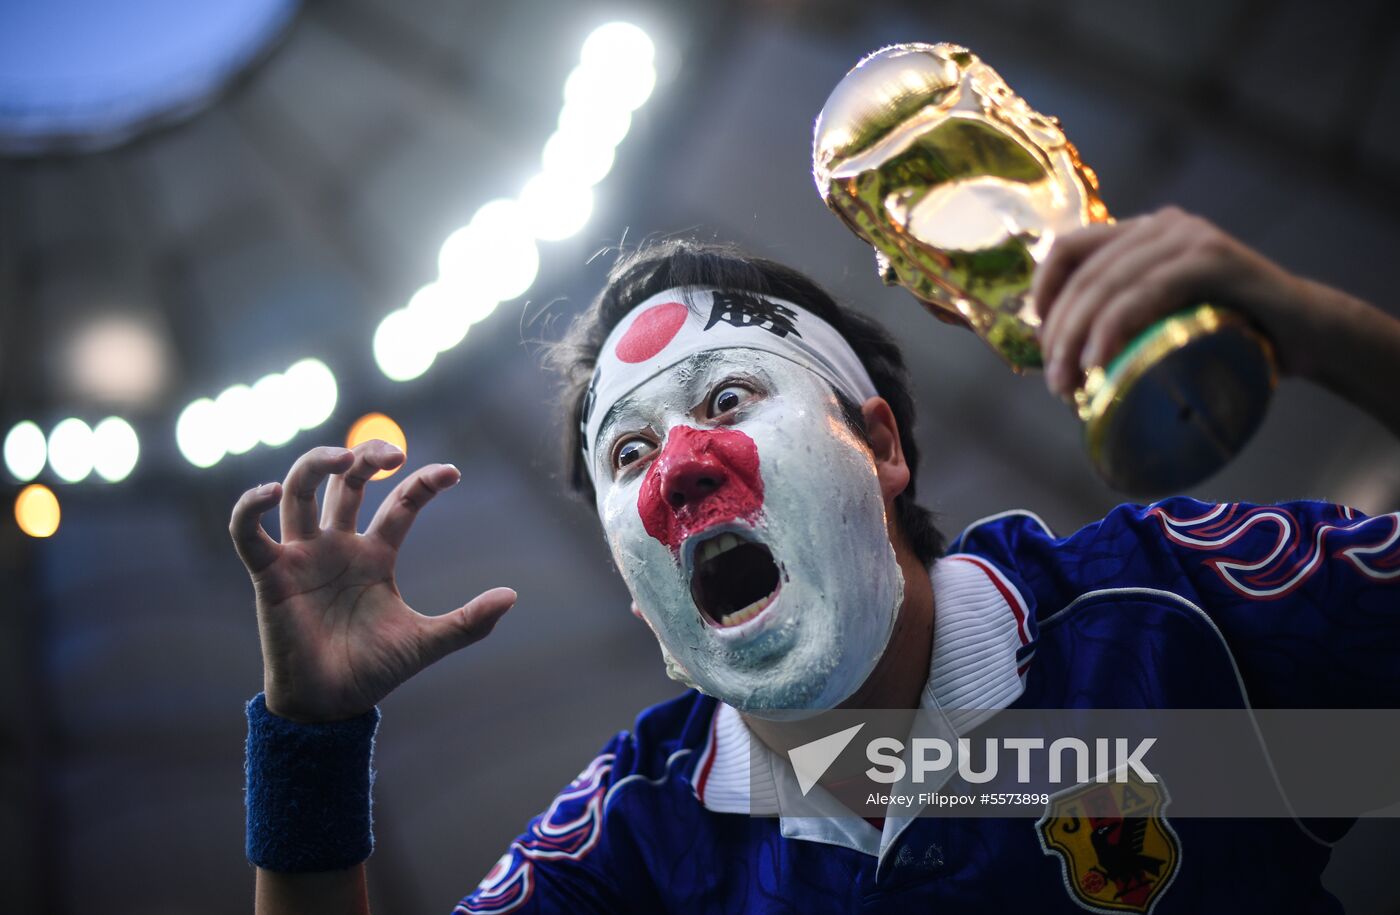 Russia World Cup Belgium - Japan